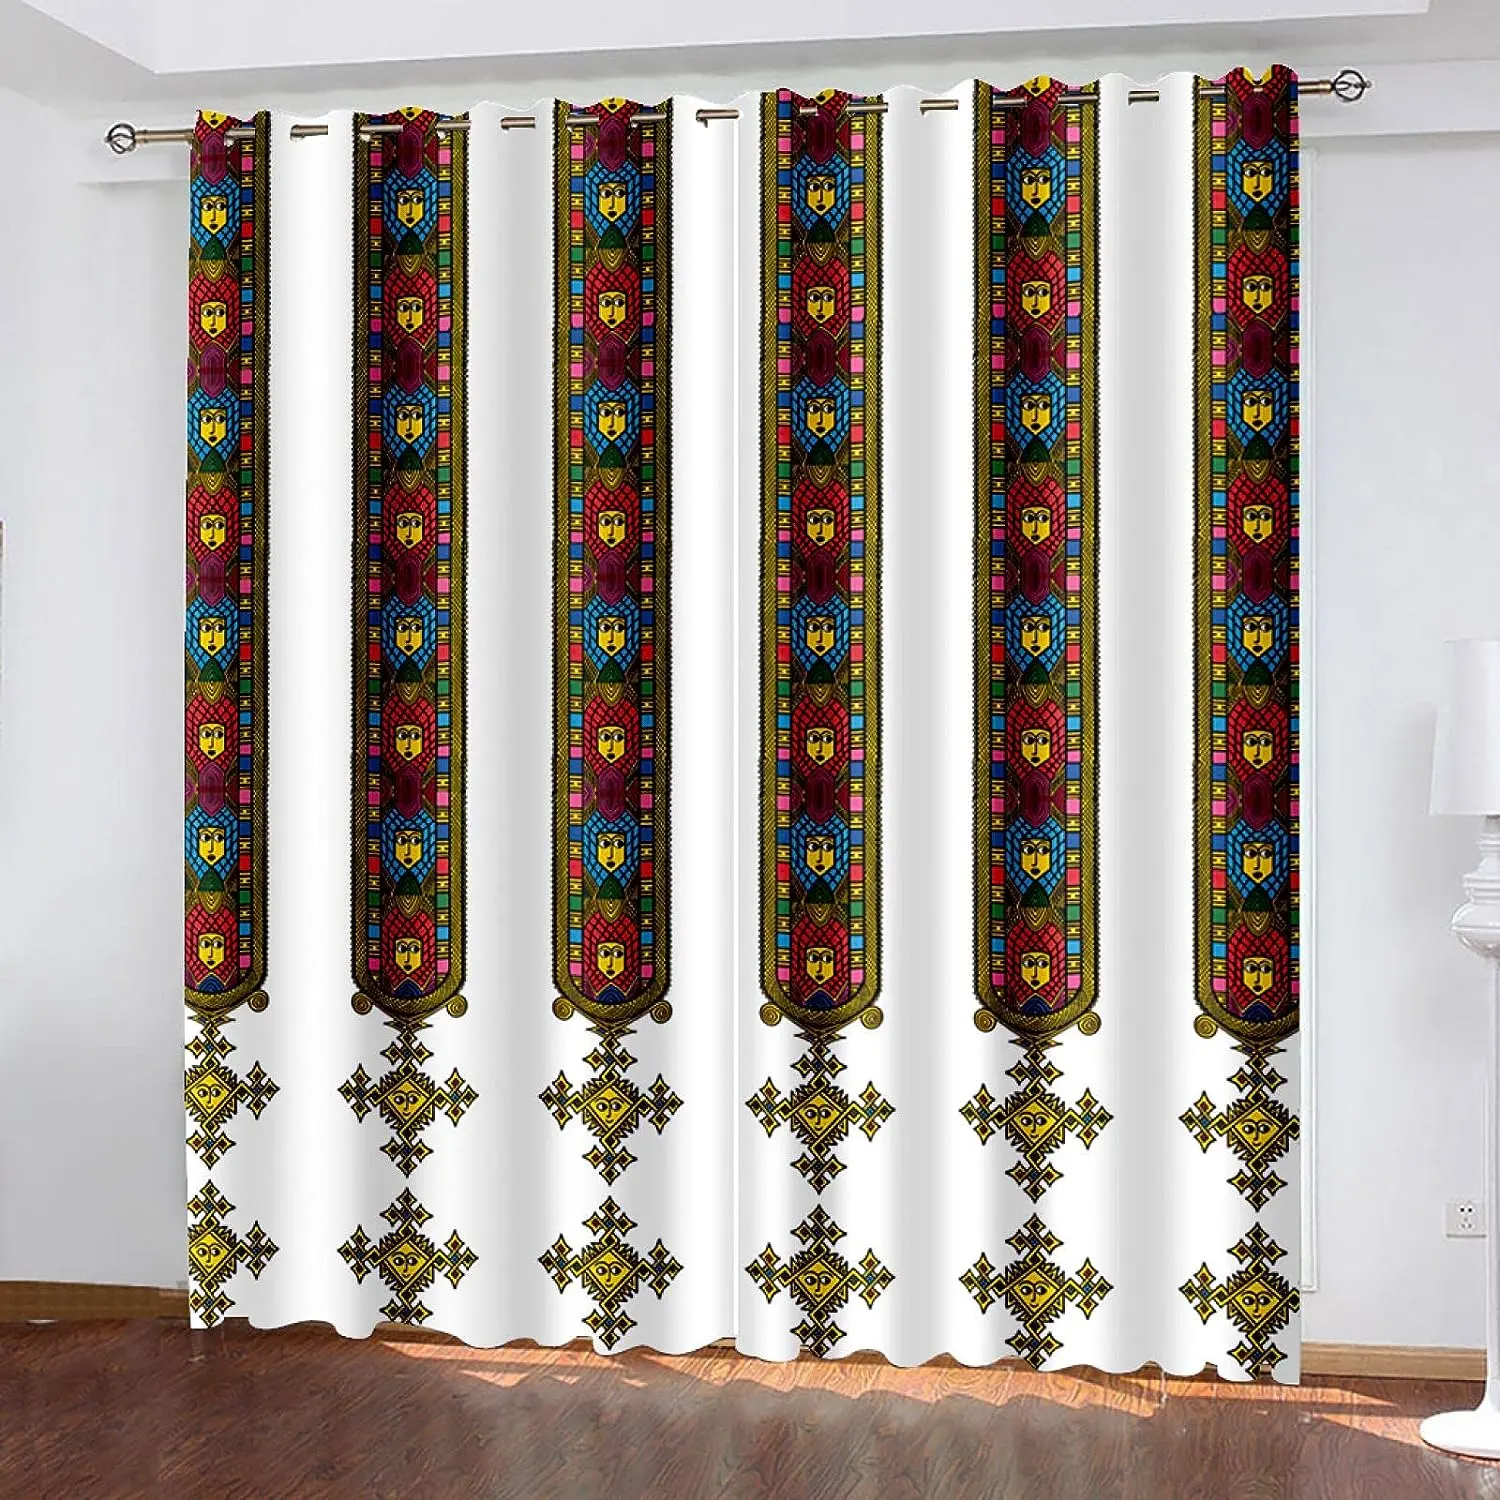 Cortina de ventana sombreada personalizada, decoración tradicional etíope, sala de estar cortinas para, dormitorio, cortina de ventana, salón, decoración sencilla